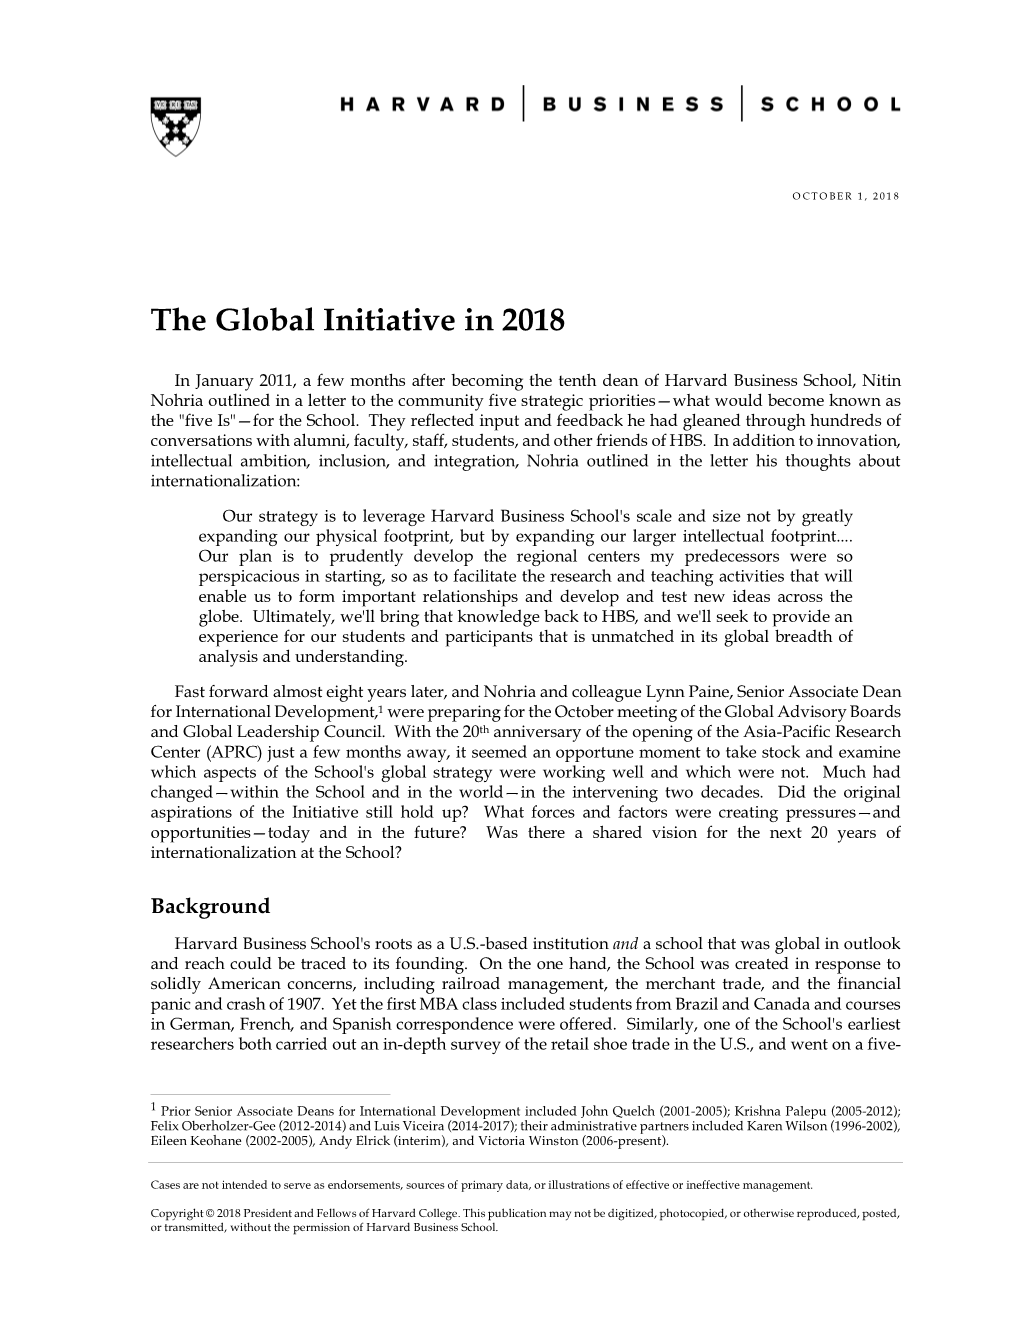 The Global Initiative in 2018